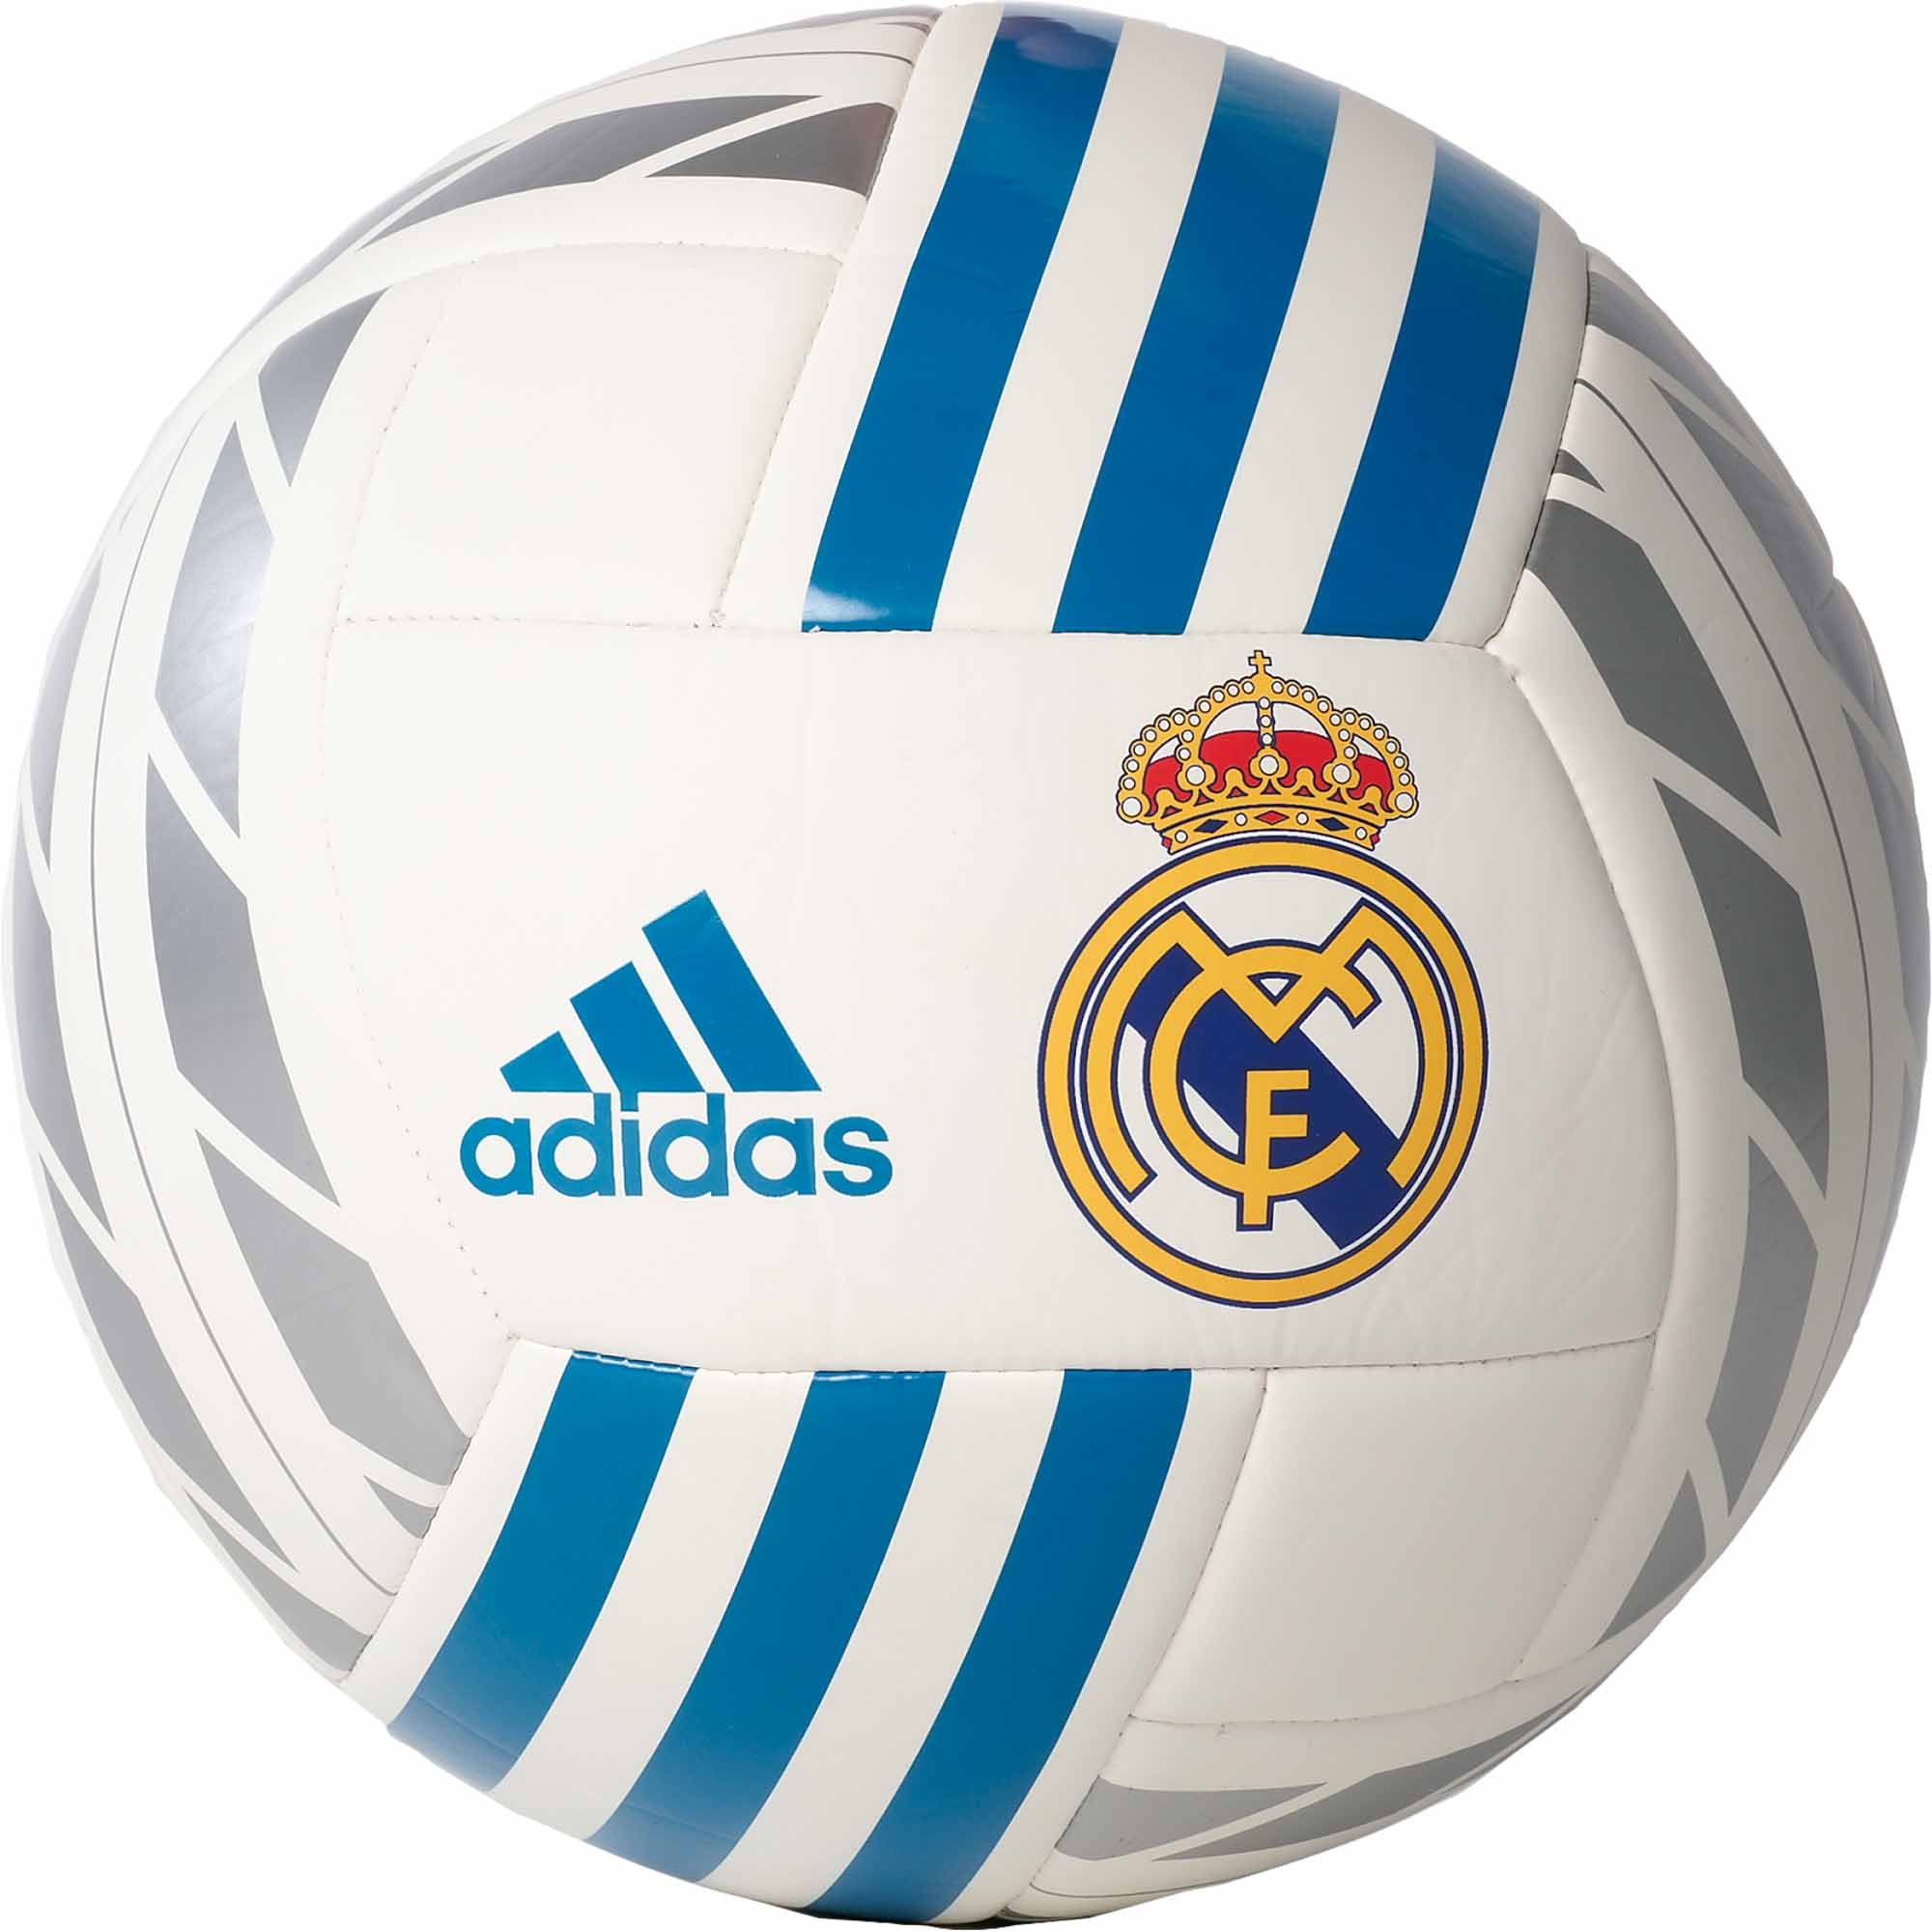 2017/18 adidas Real Madrid Soccer Ball 